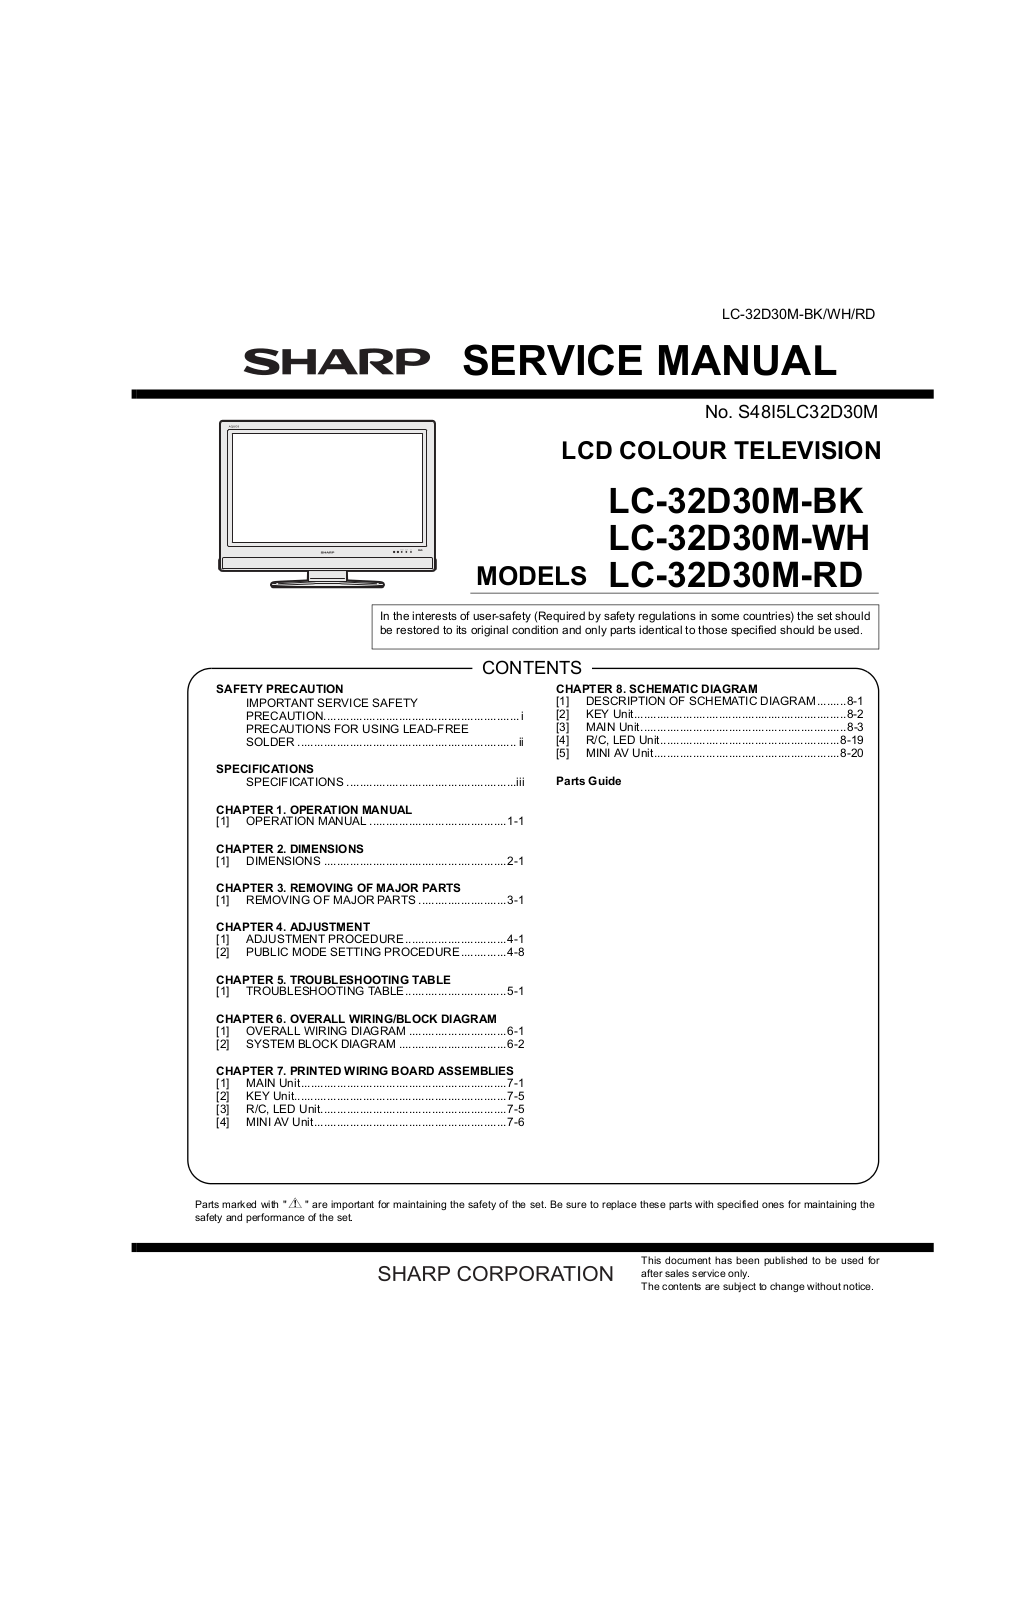 Sharp LC-32D30M Service manual